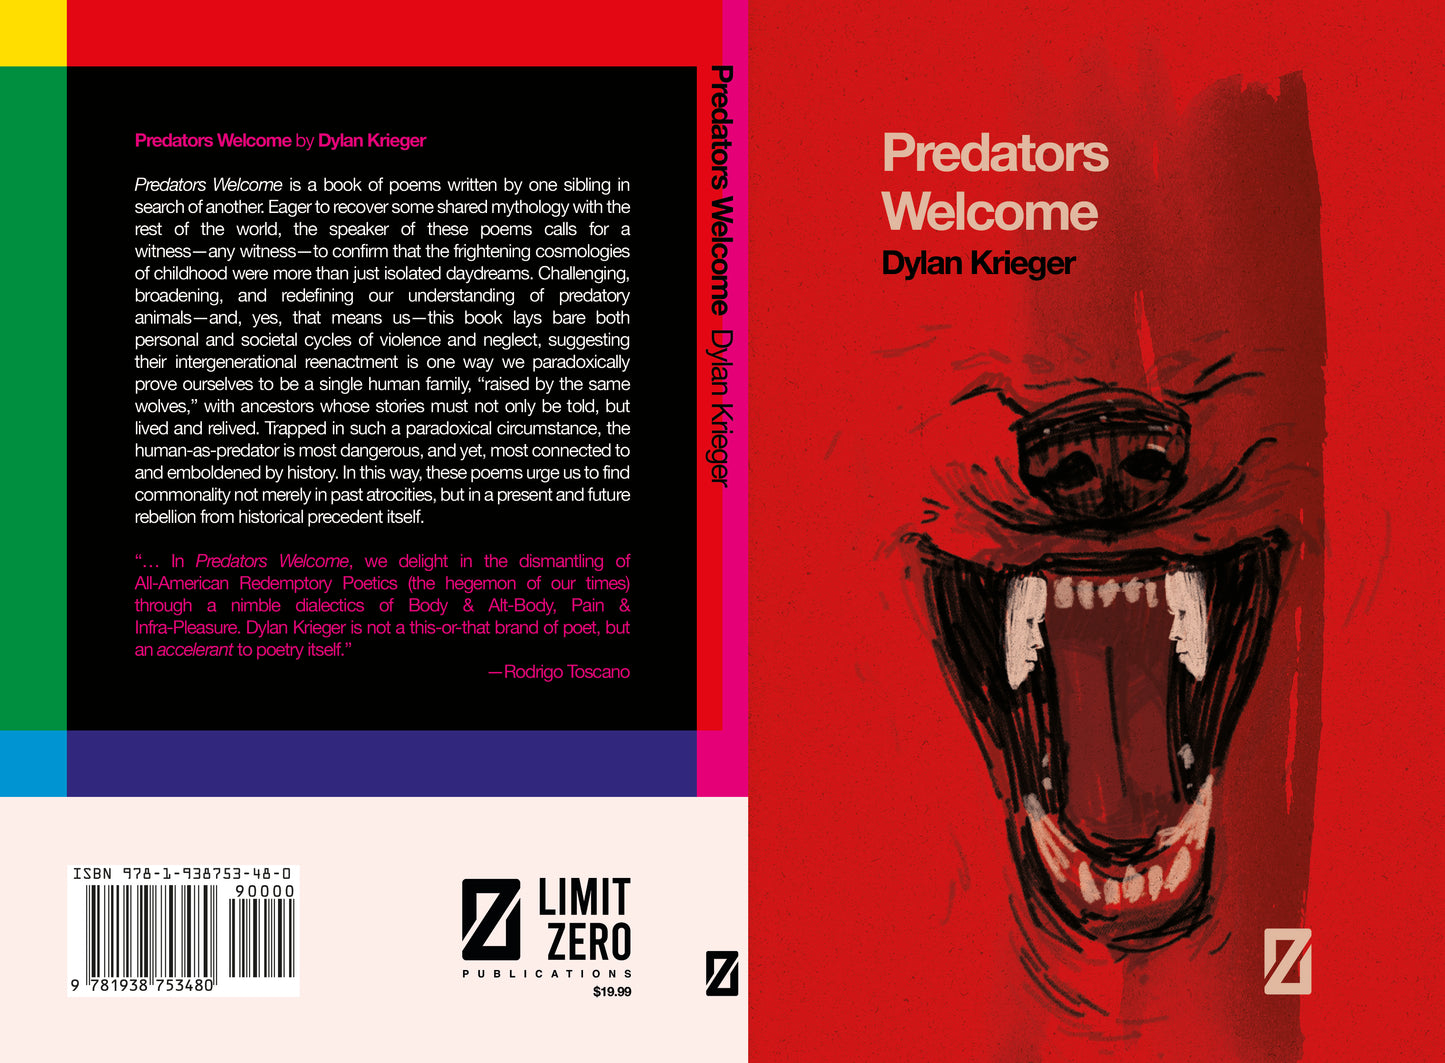 Predators Welcome by Dylan Krieger